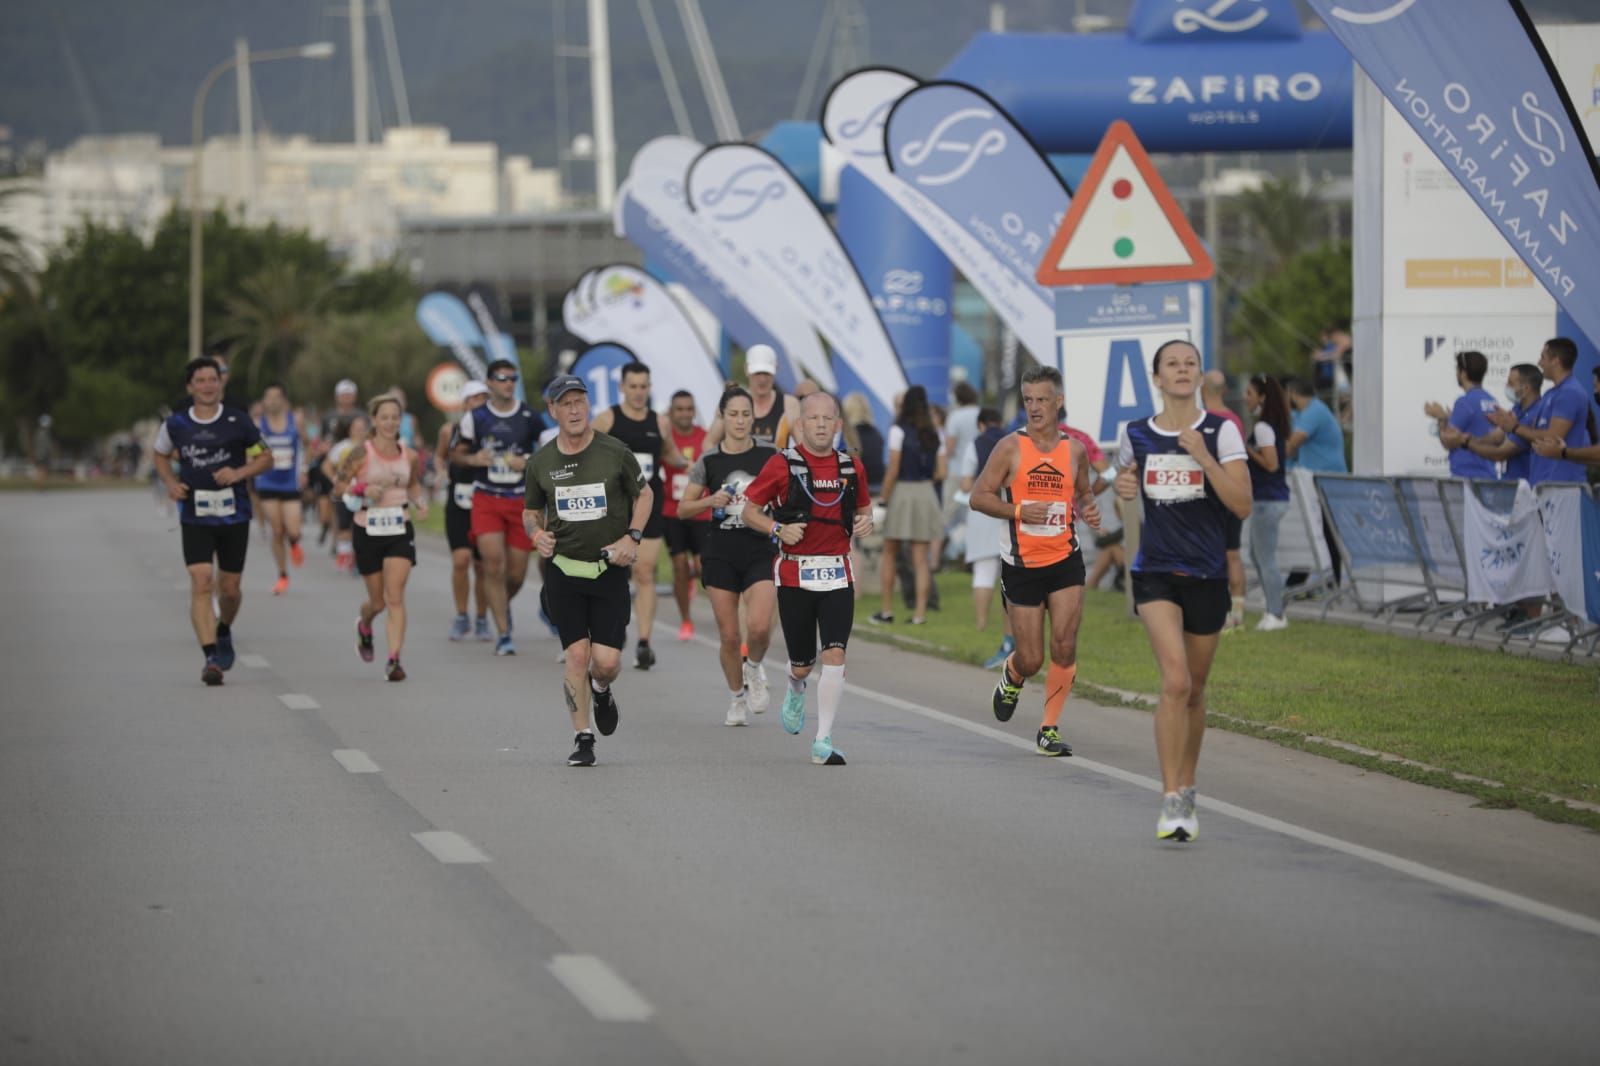 Zafiro Palma Marathon